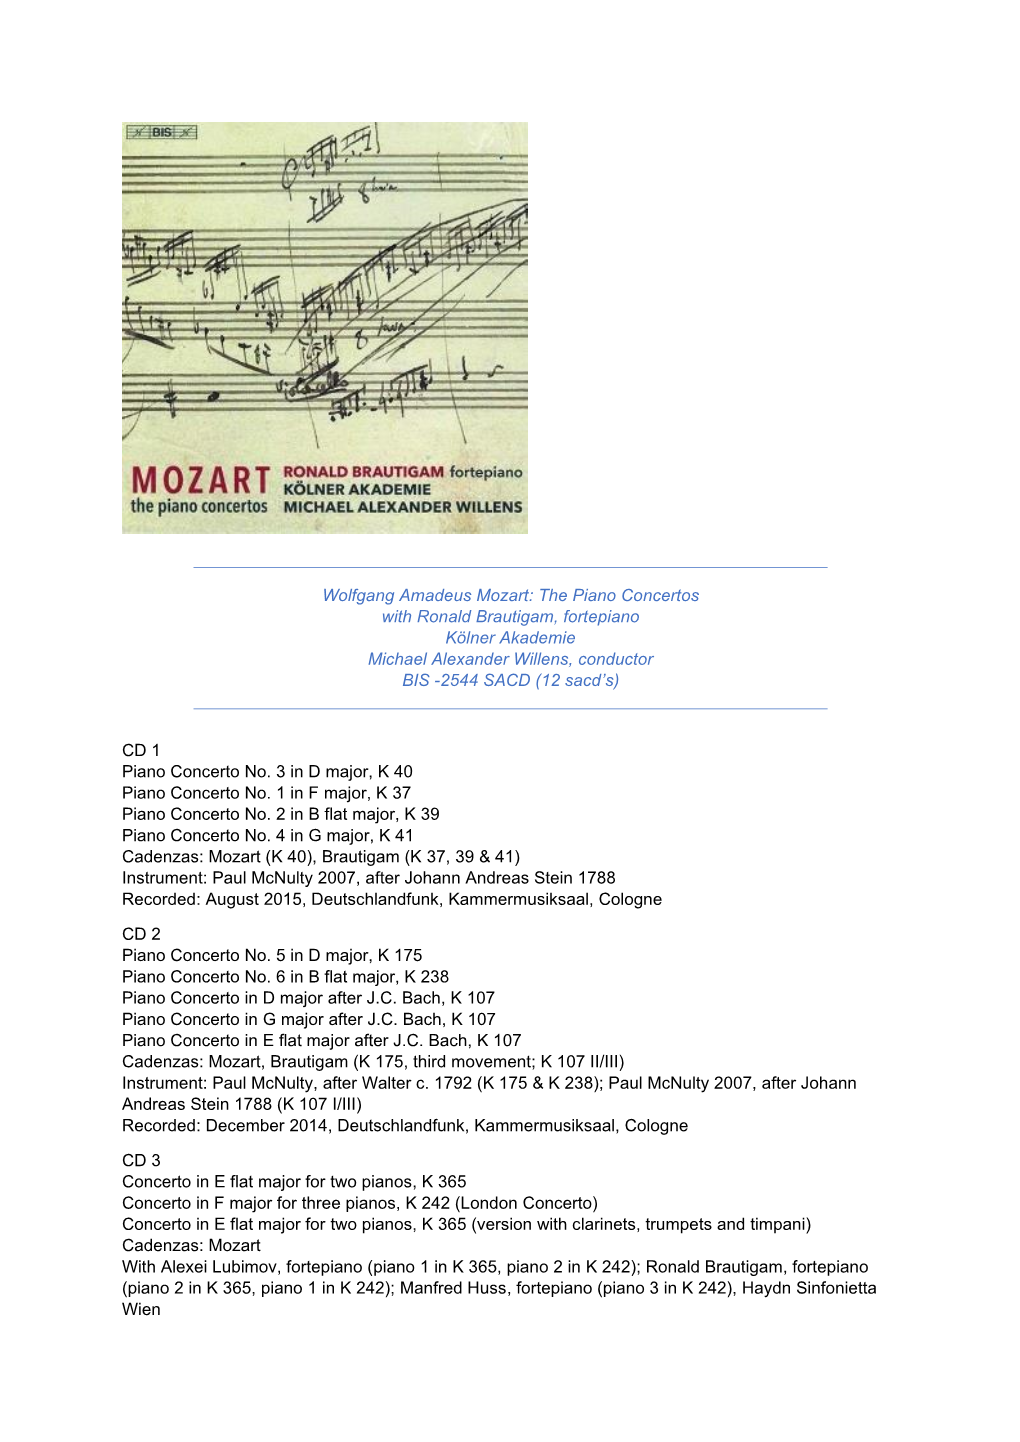 Wolfgang Amadeus Mozart: the Piano Concertos with Ronald Brautigam, Fortepiano Kölner Akademie Michael Alexander Willens, Conductor BIS -2544 SACD (12 Sacd’S)